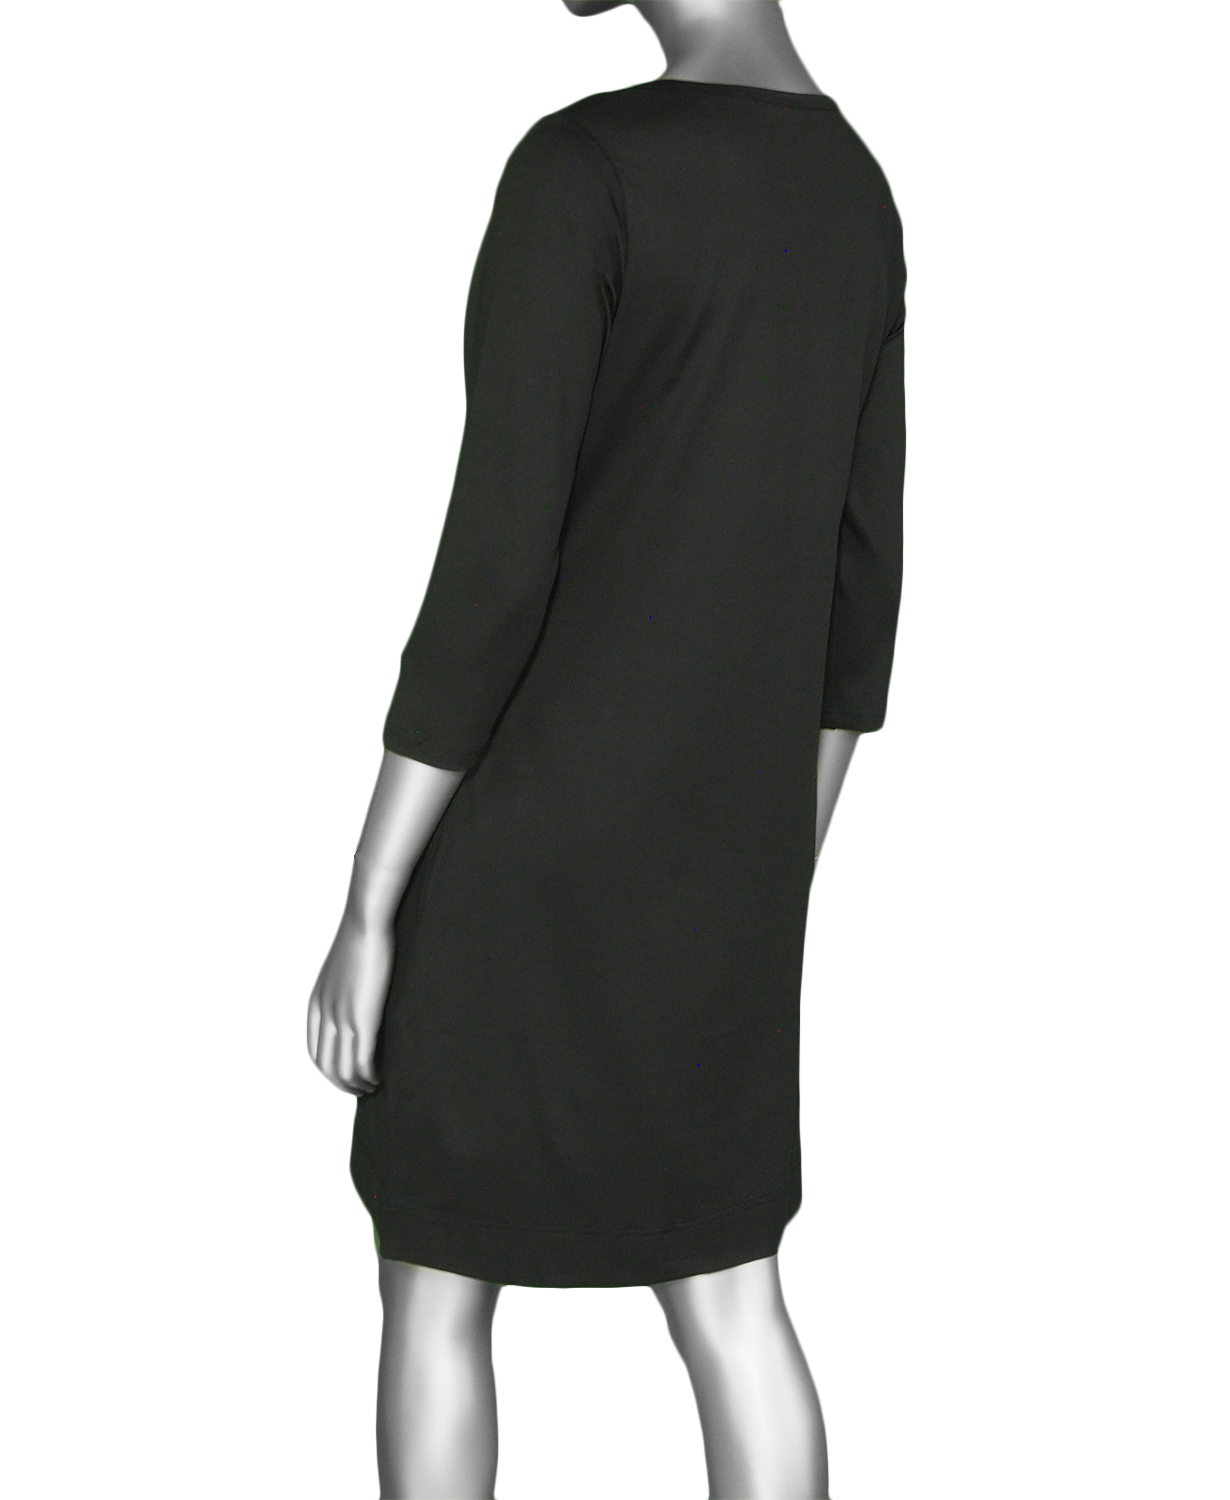 001- LuLu B Black and Beige Sexy Dress